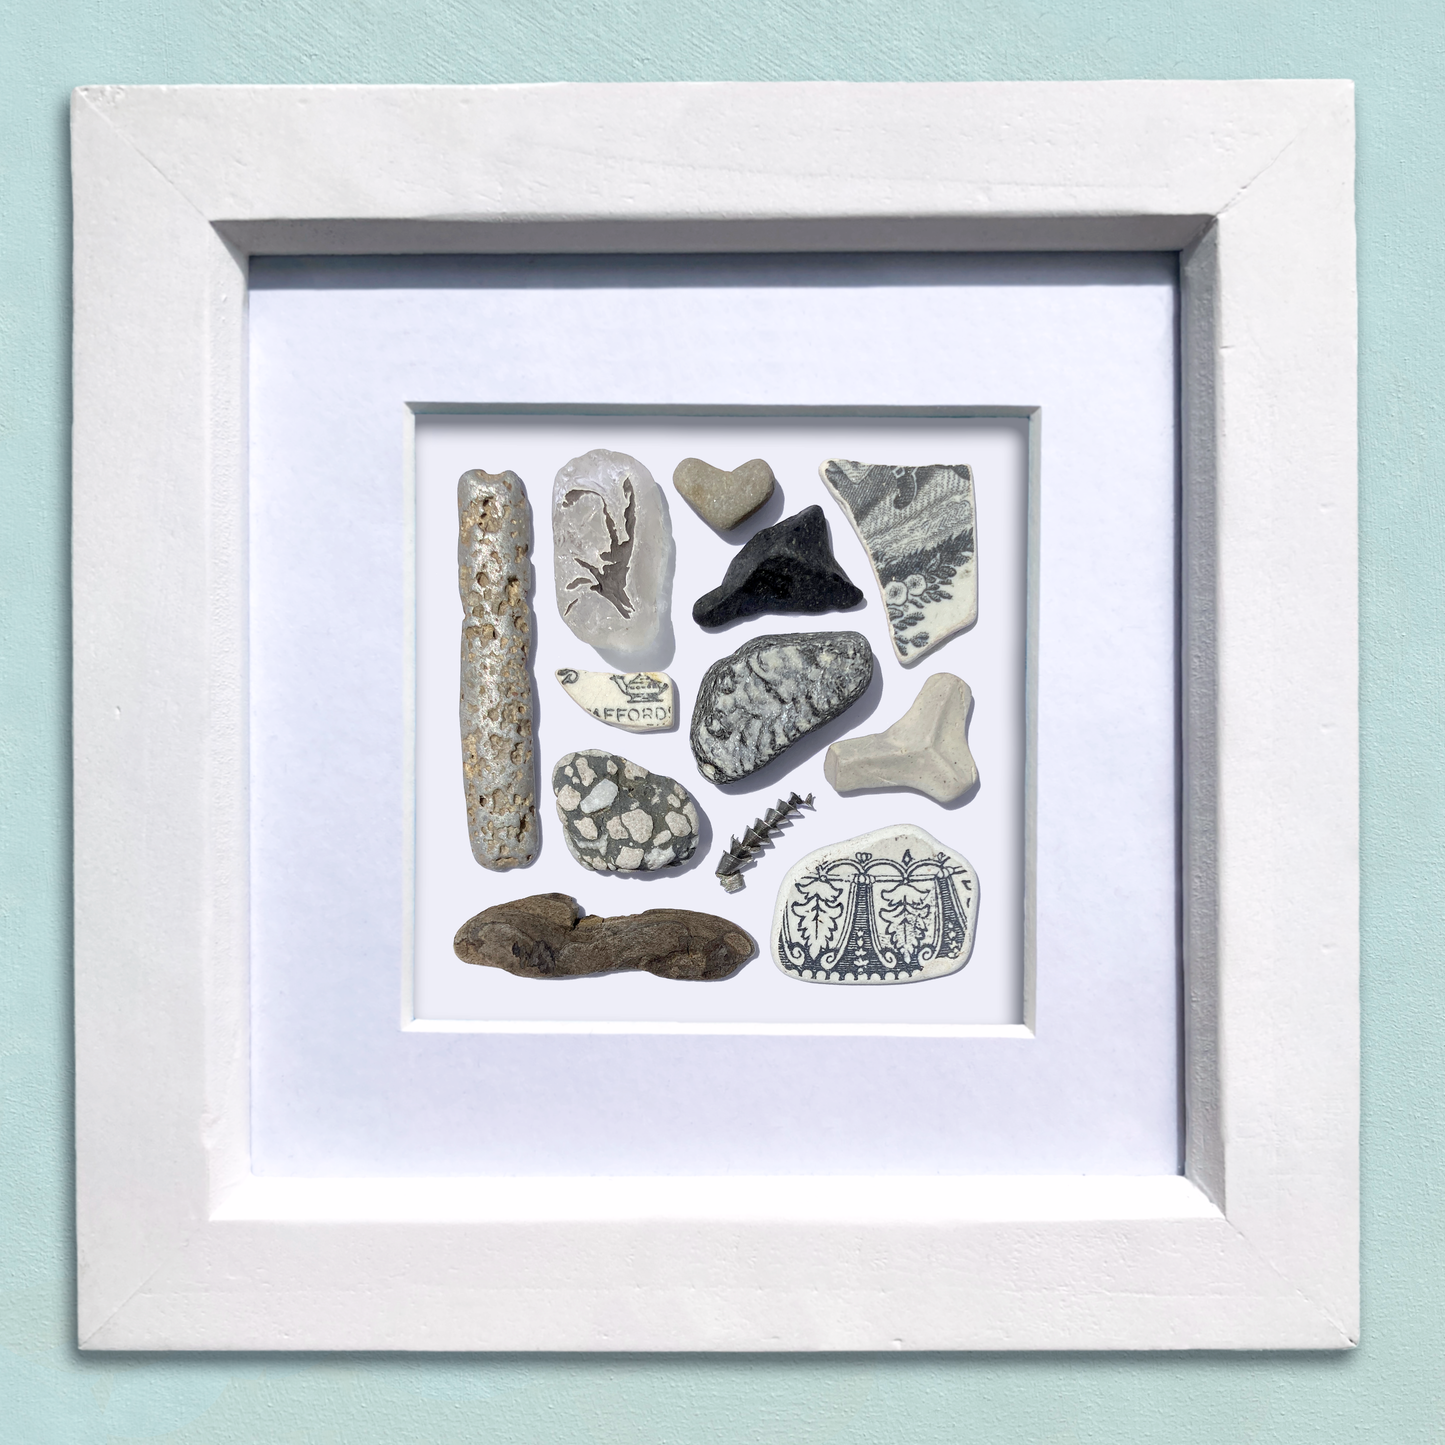 Framed Beach Wall Art - Beachcombing Curiosities Collage - Beautiful Blacks - Sea Glass, Victorian Pottery, Driftwood